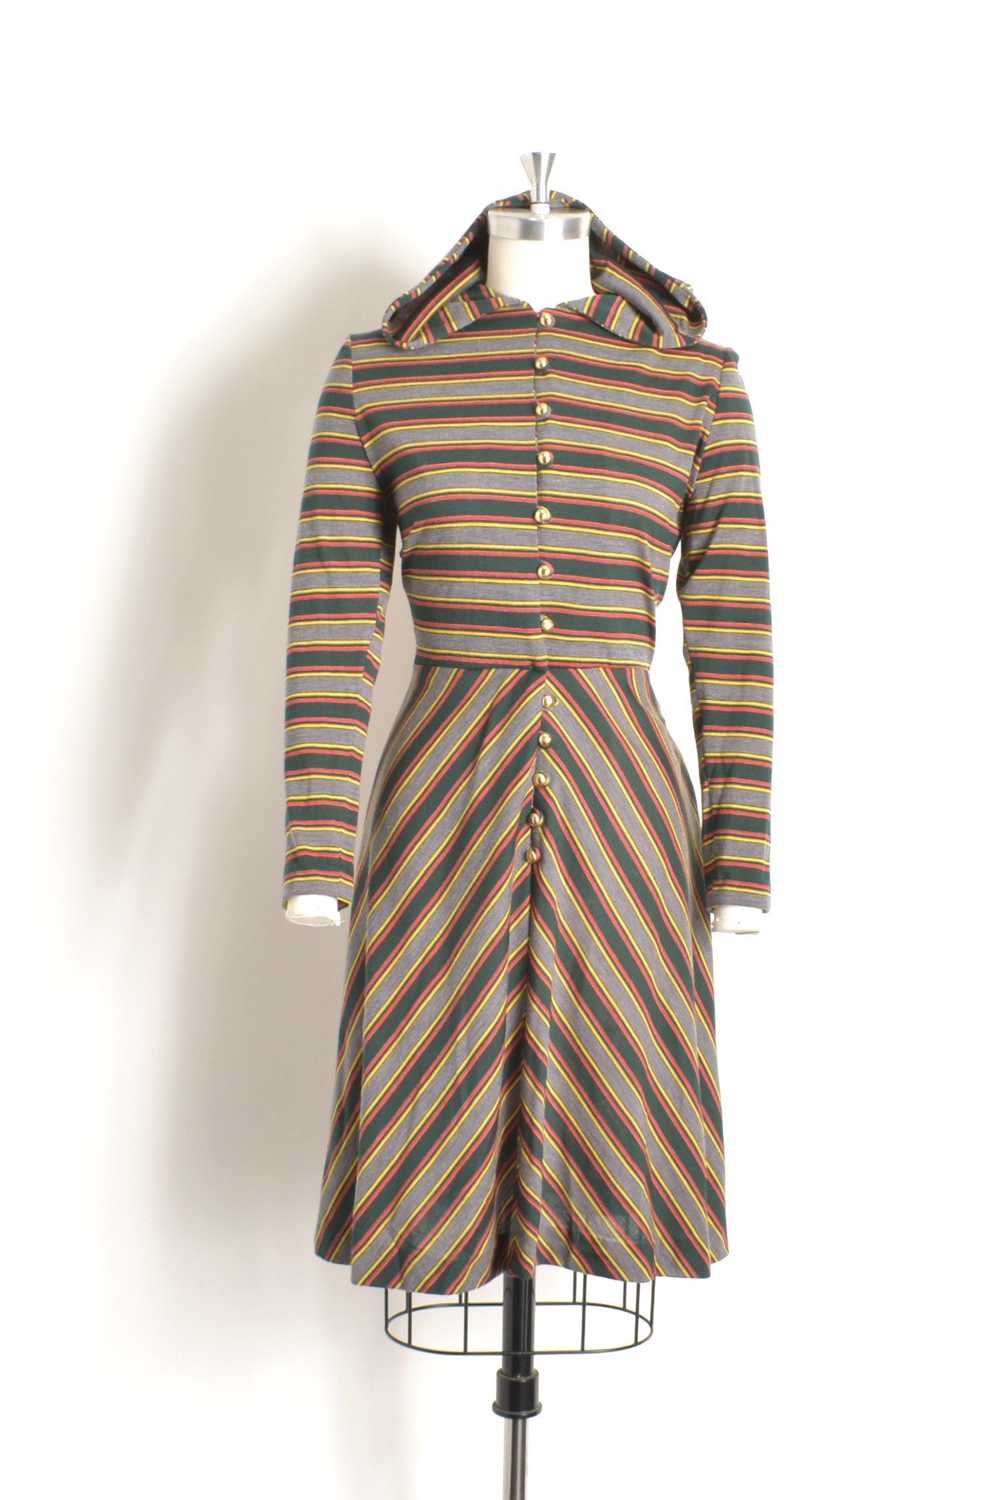 1970s Striped Hooded Dress-medium - image 1